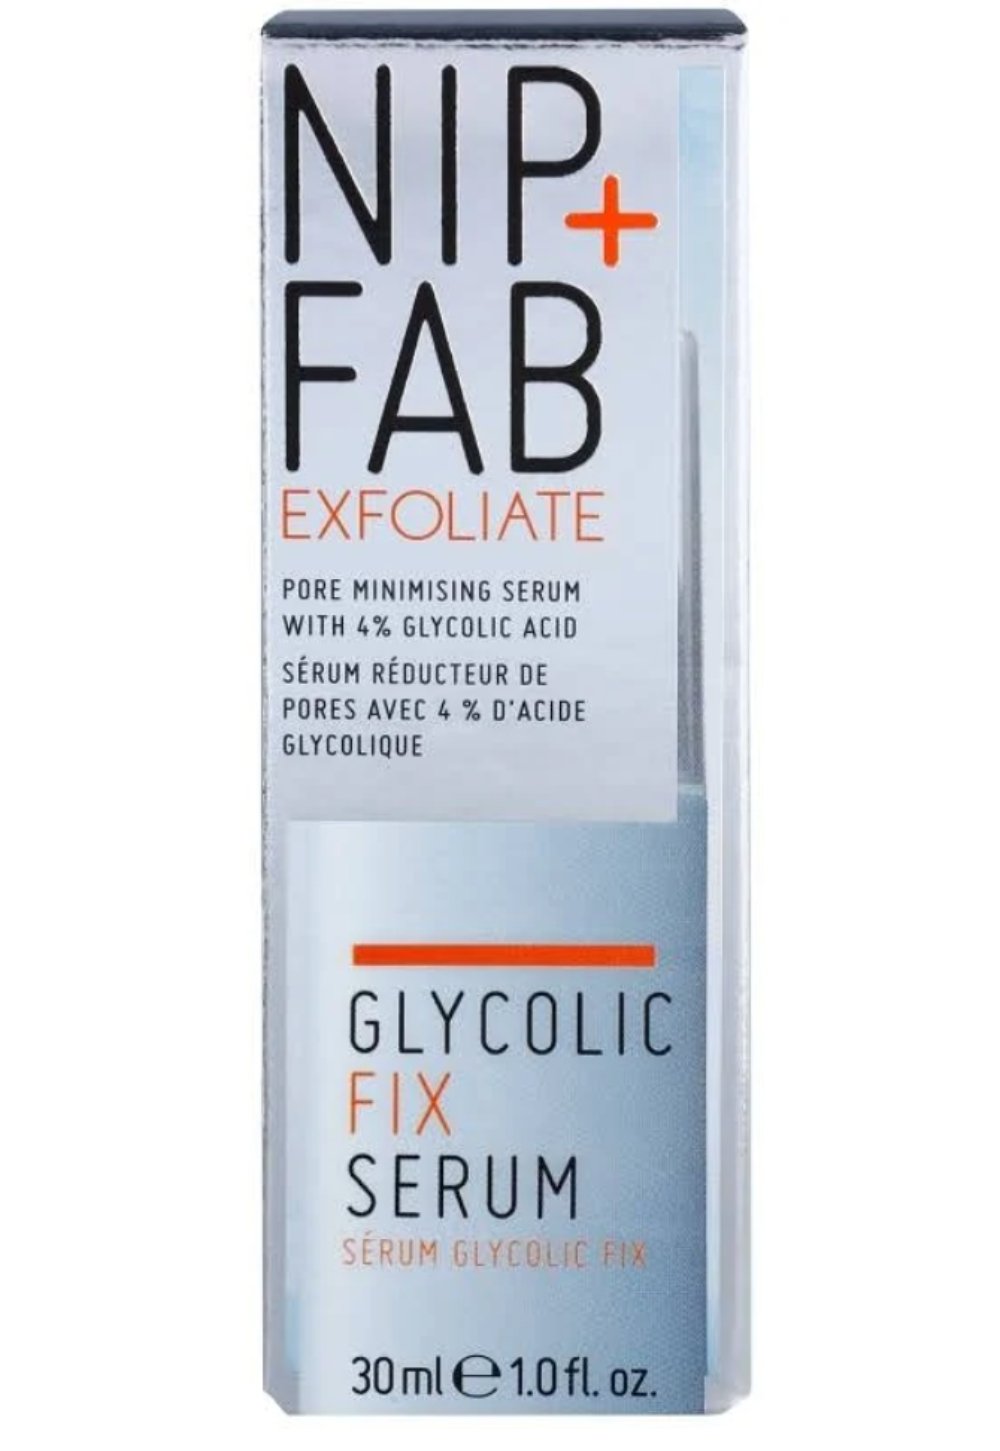 NIP+FAB Glycolic Fix Serum 30ml - The Face Method